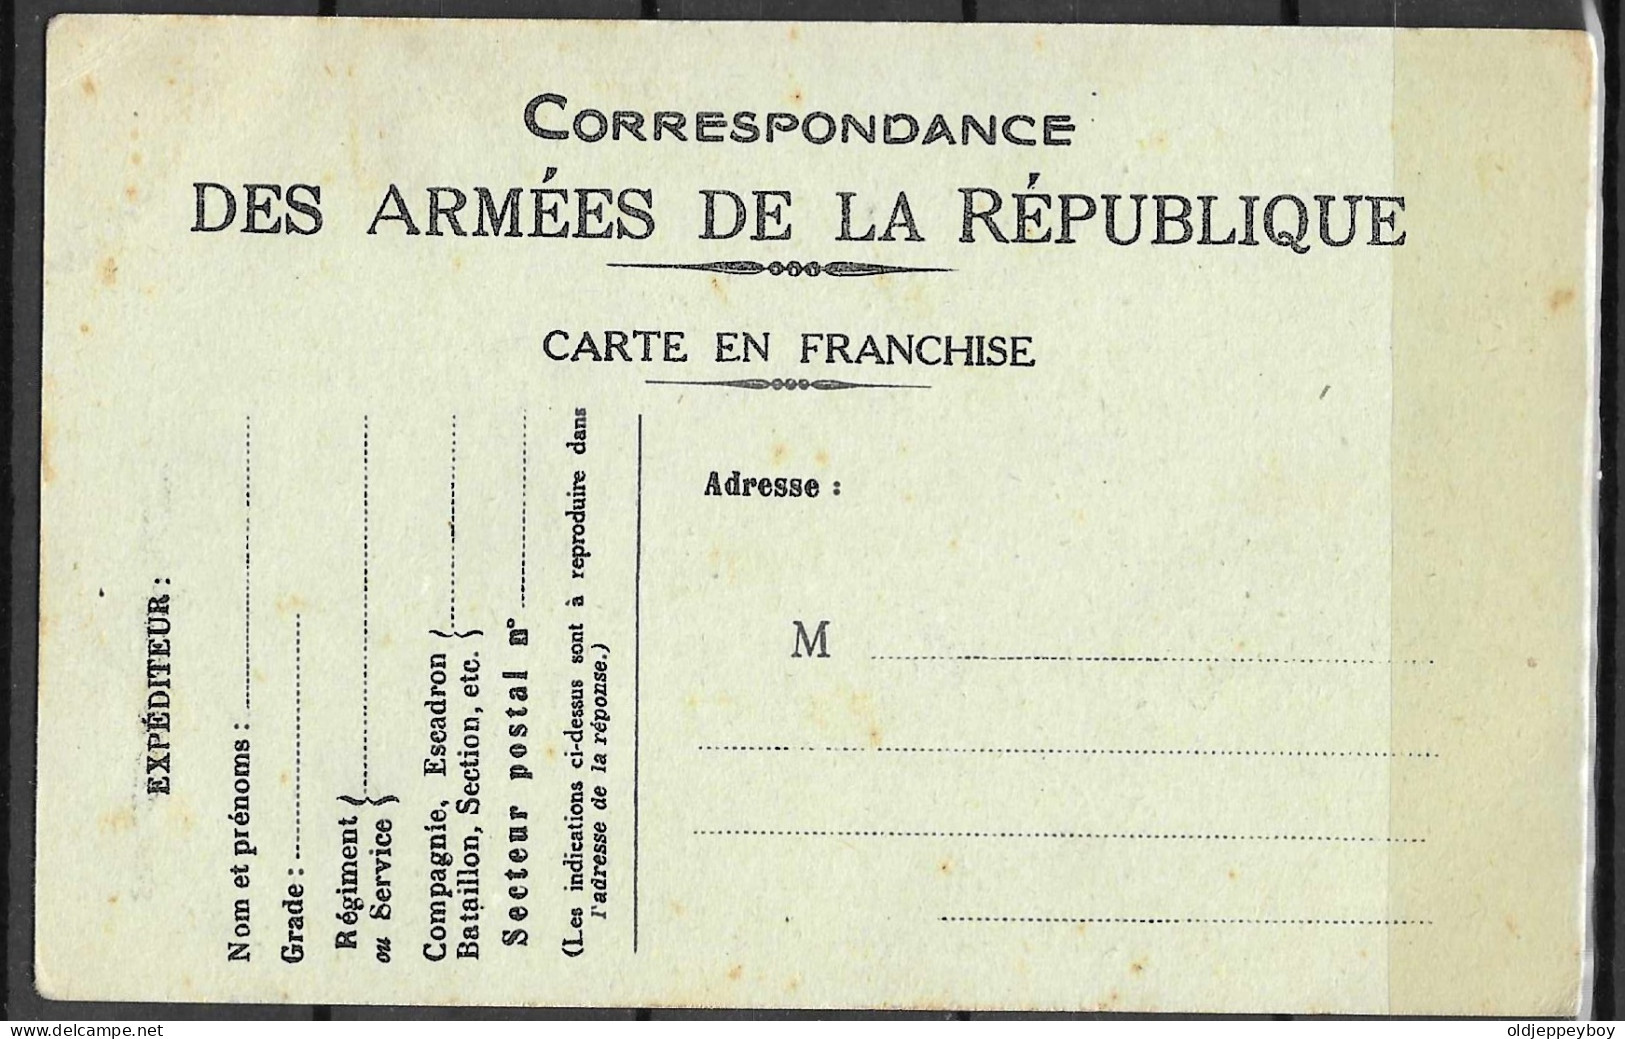 WORLD WAR 1 FRANCE  PROPAGANDA POSTCARD  WW1 "DEBARQUEES TROUPS AMERICAINES" 1917  DES ARMEES DE LA REPUBLIQUE - War 1914-18